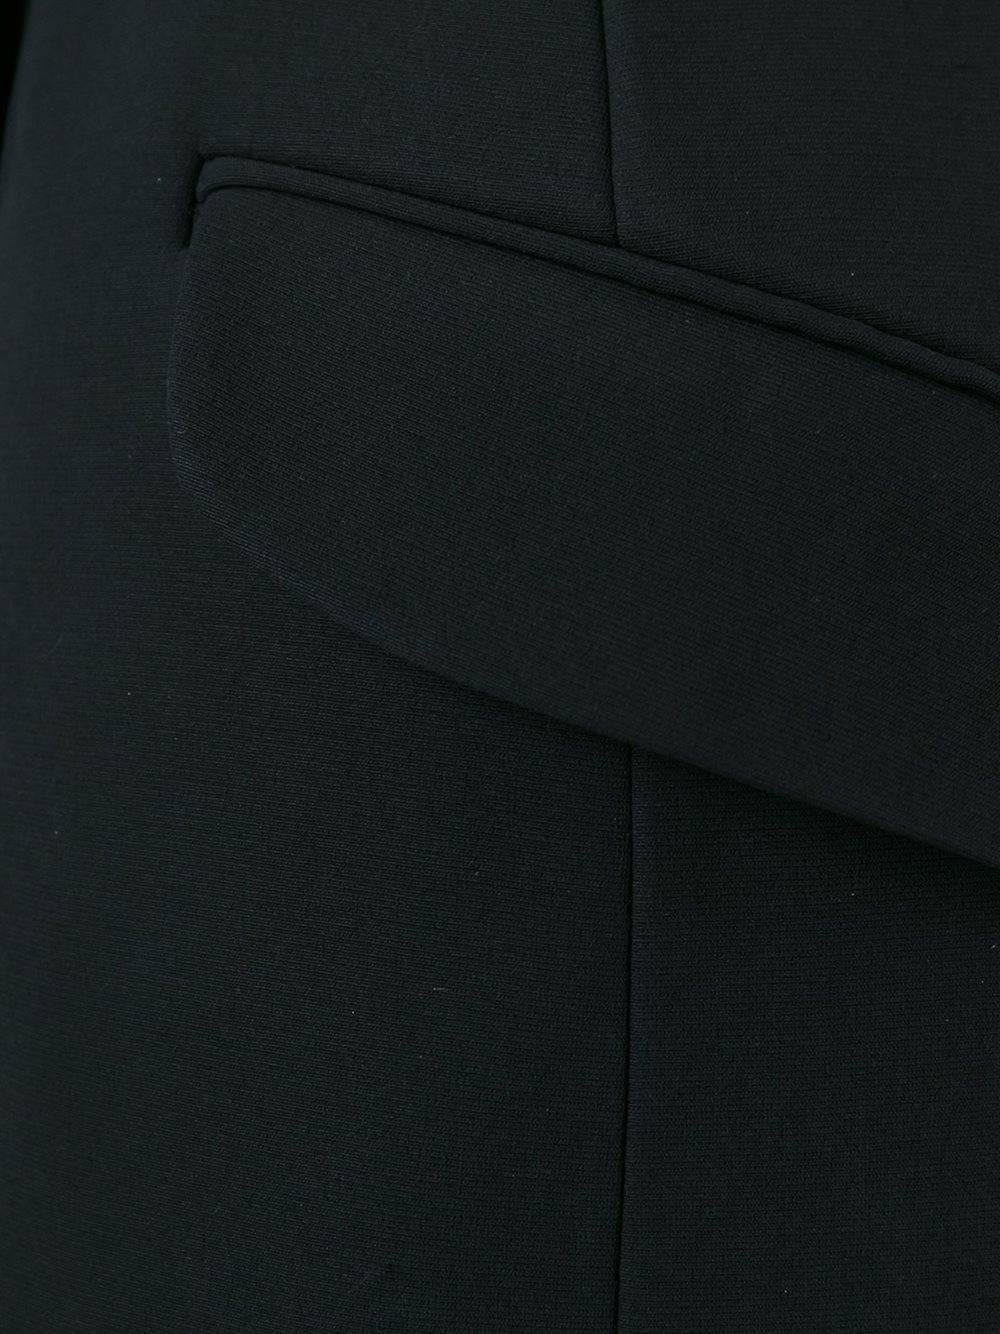 Black Christian Dior silk strapless tuxedo dress.

Colour: Black

Material: Silk 100%

Size: FR 42

Measurements: bust: 86 centimetres, waist: 74 centimetres, hips: 92 centimetres, length: 70 centimetres

Condition: 9 out of 10 / still has